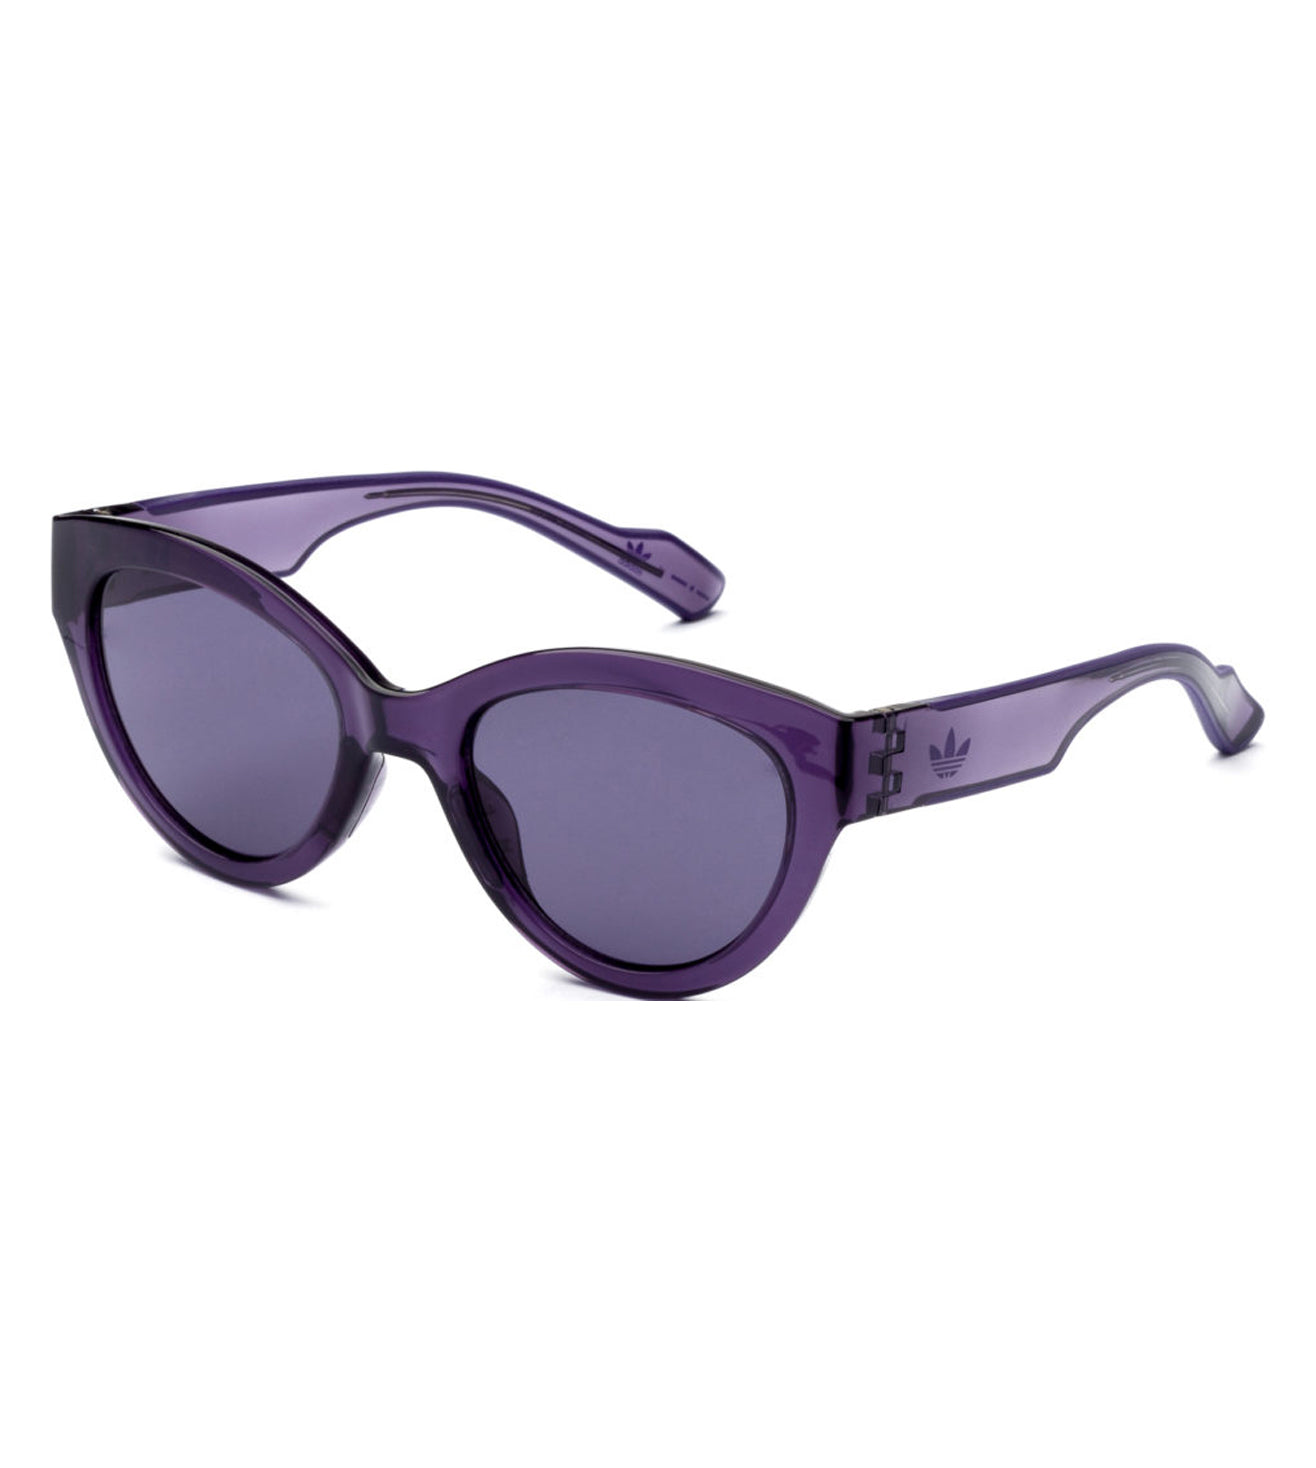 Adidas Originals Women's Purple Cateye Sunglasses